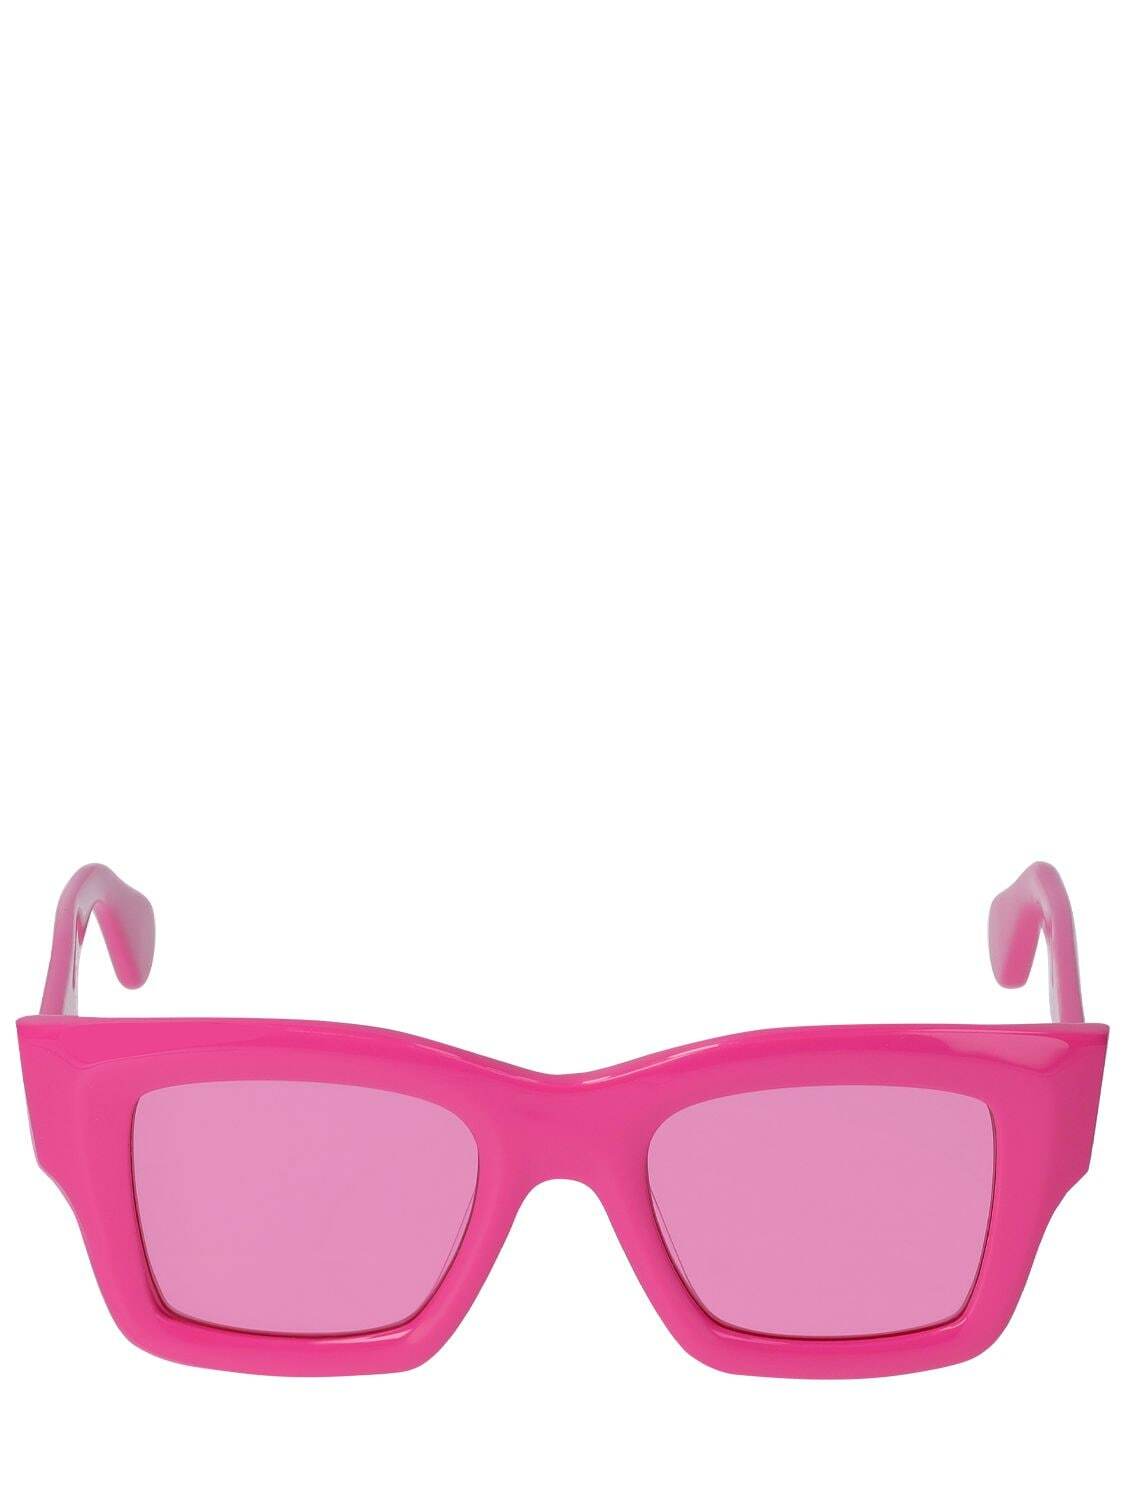 JACQUEMUS Les Lunettes Nocio Sunglasses in grey / pink